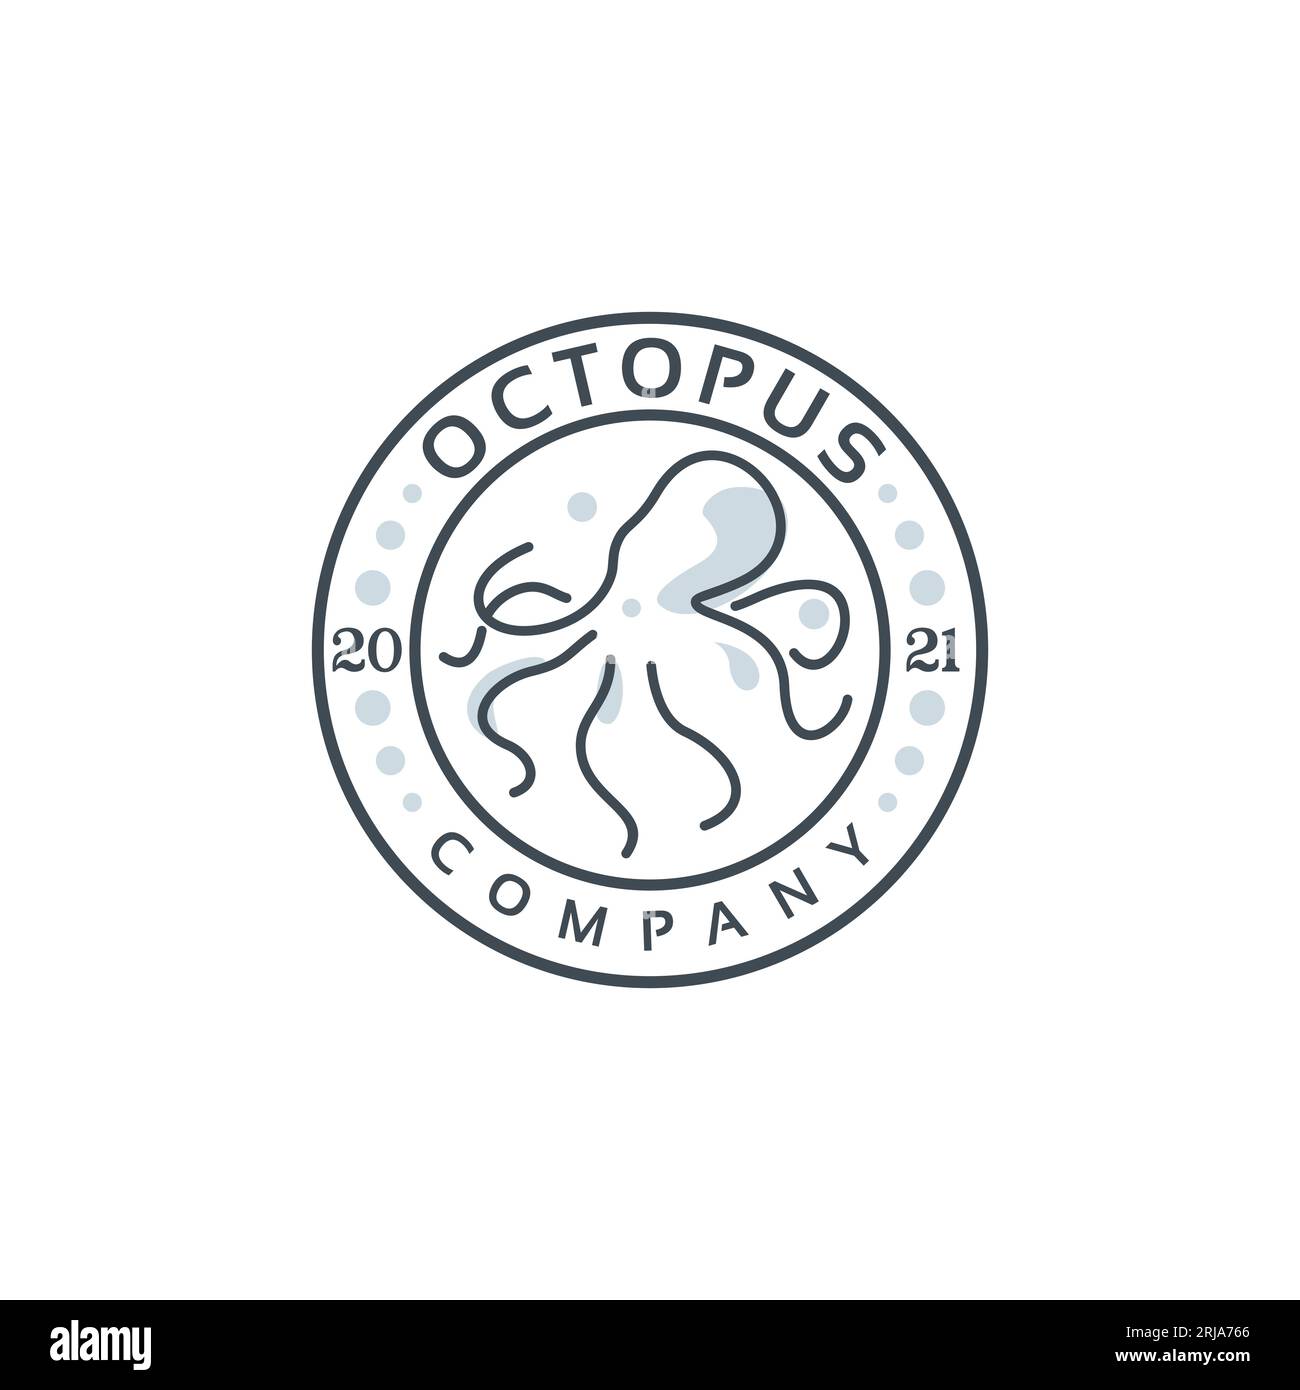 Simple Octopus Squid Label Logo Inspirational Design Stock Vector